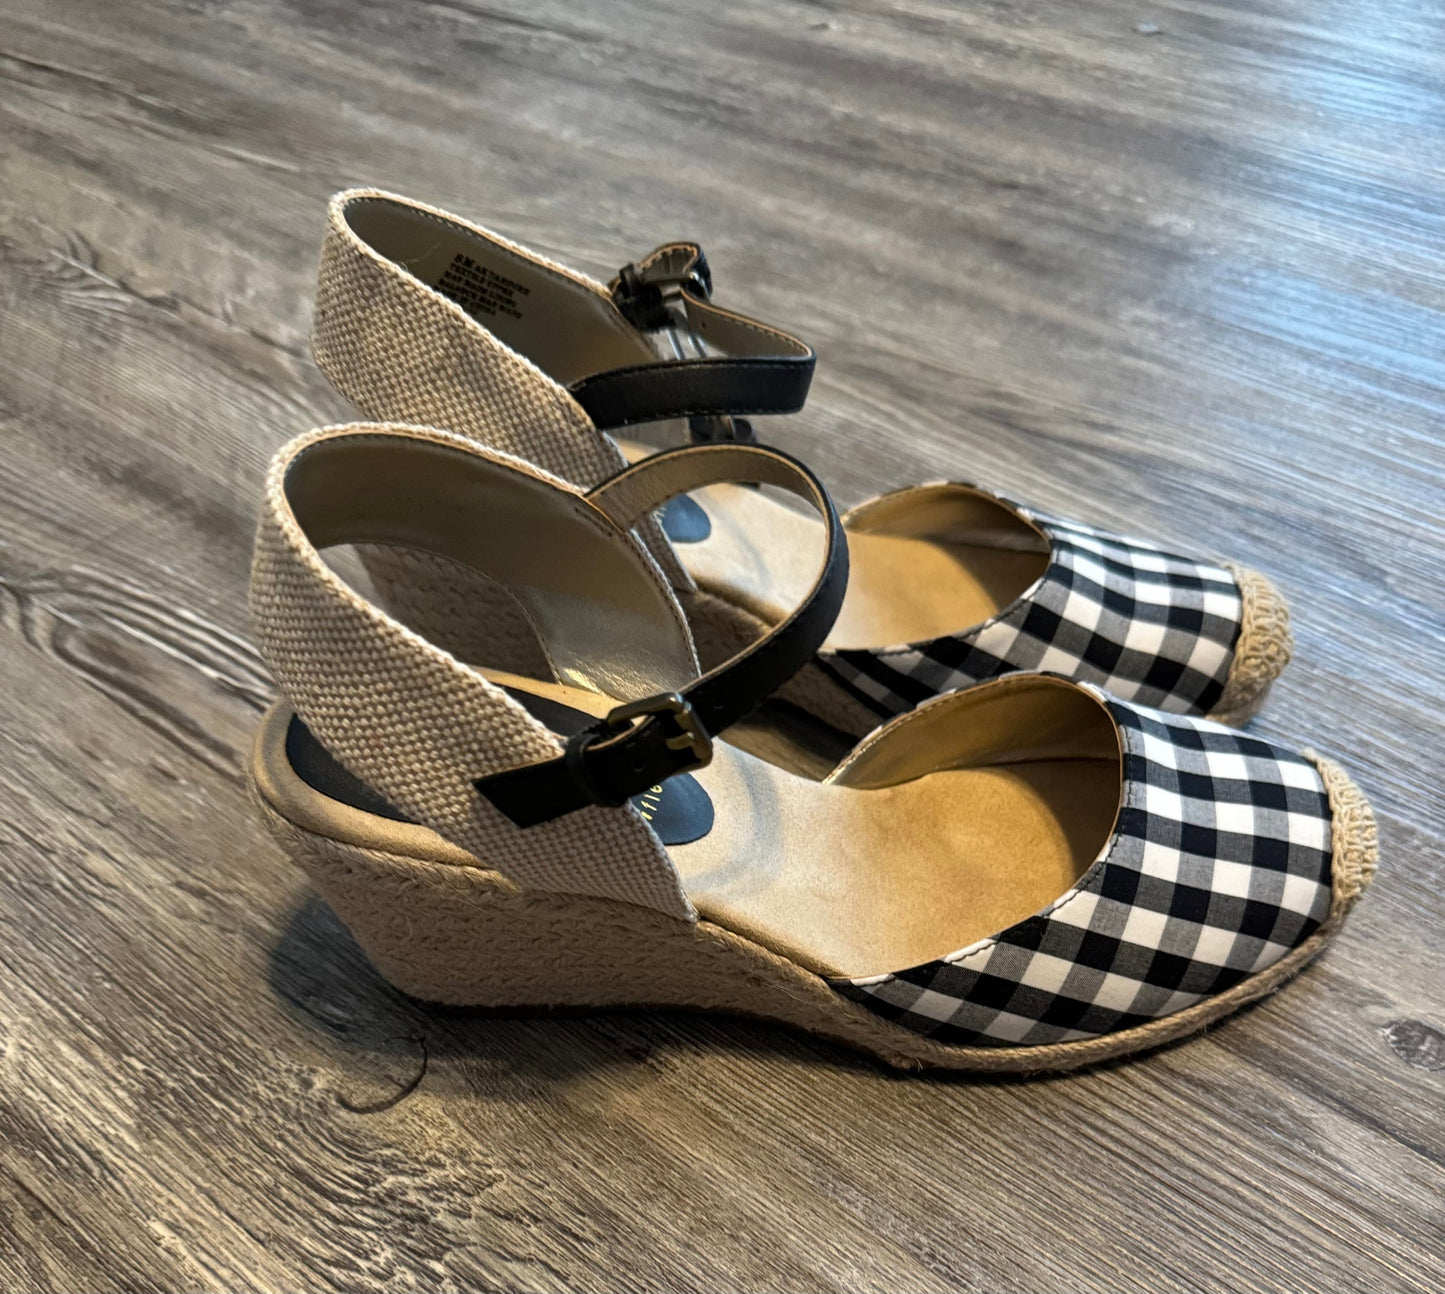 Shoes Heels Block By Anne Klein  Size: 8.5